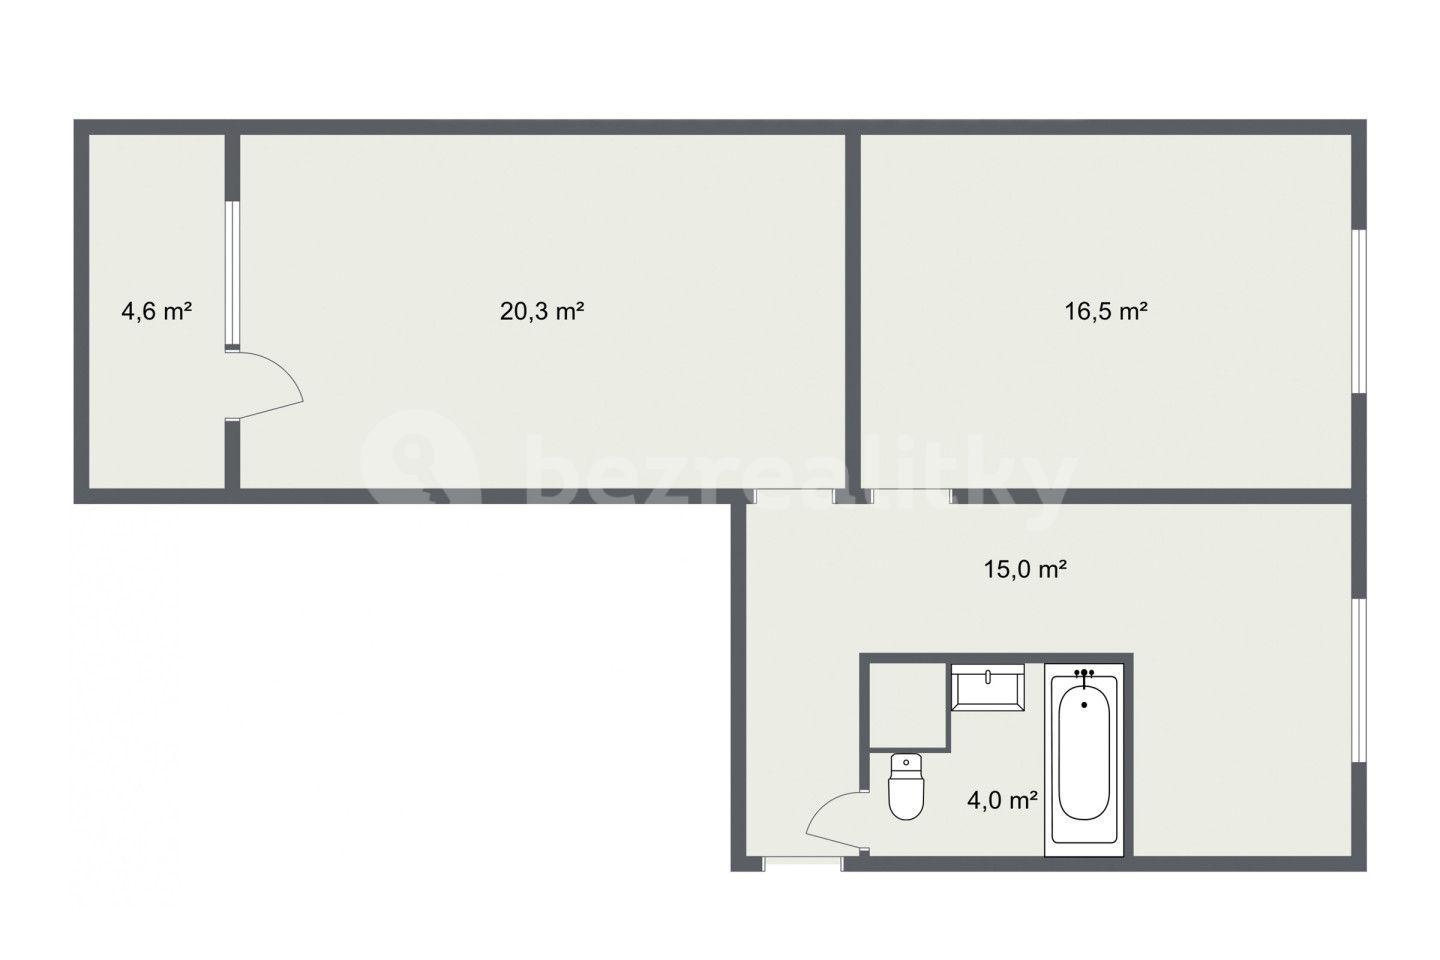 2 bedroom flat for sale, 56 m², Maďarská, Karlovy Vary, Karlovarský Region